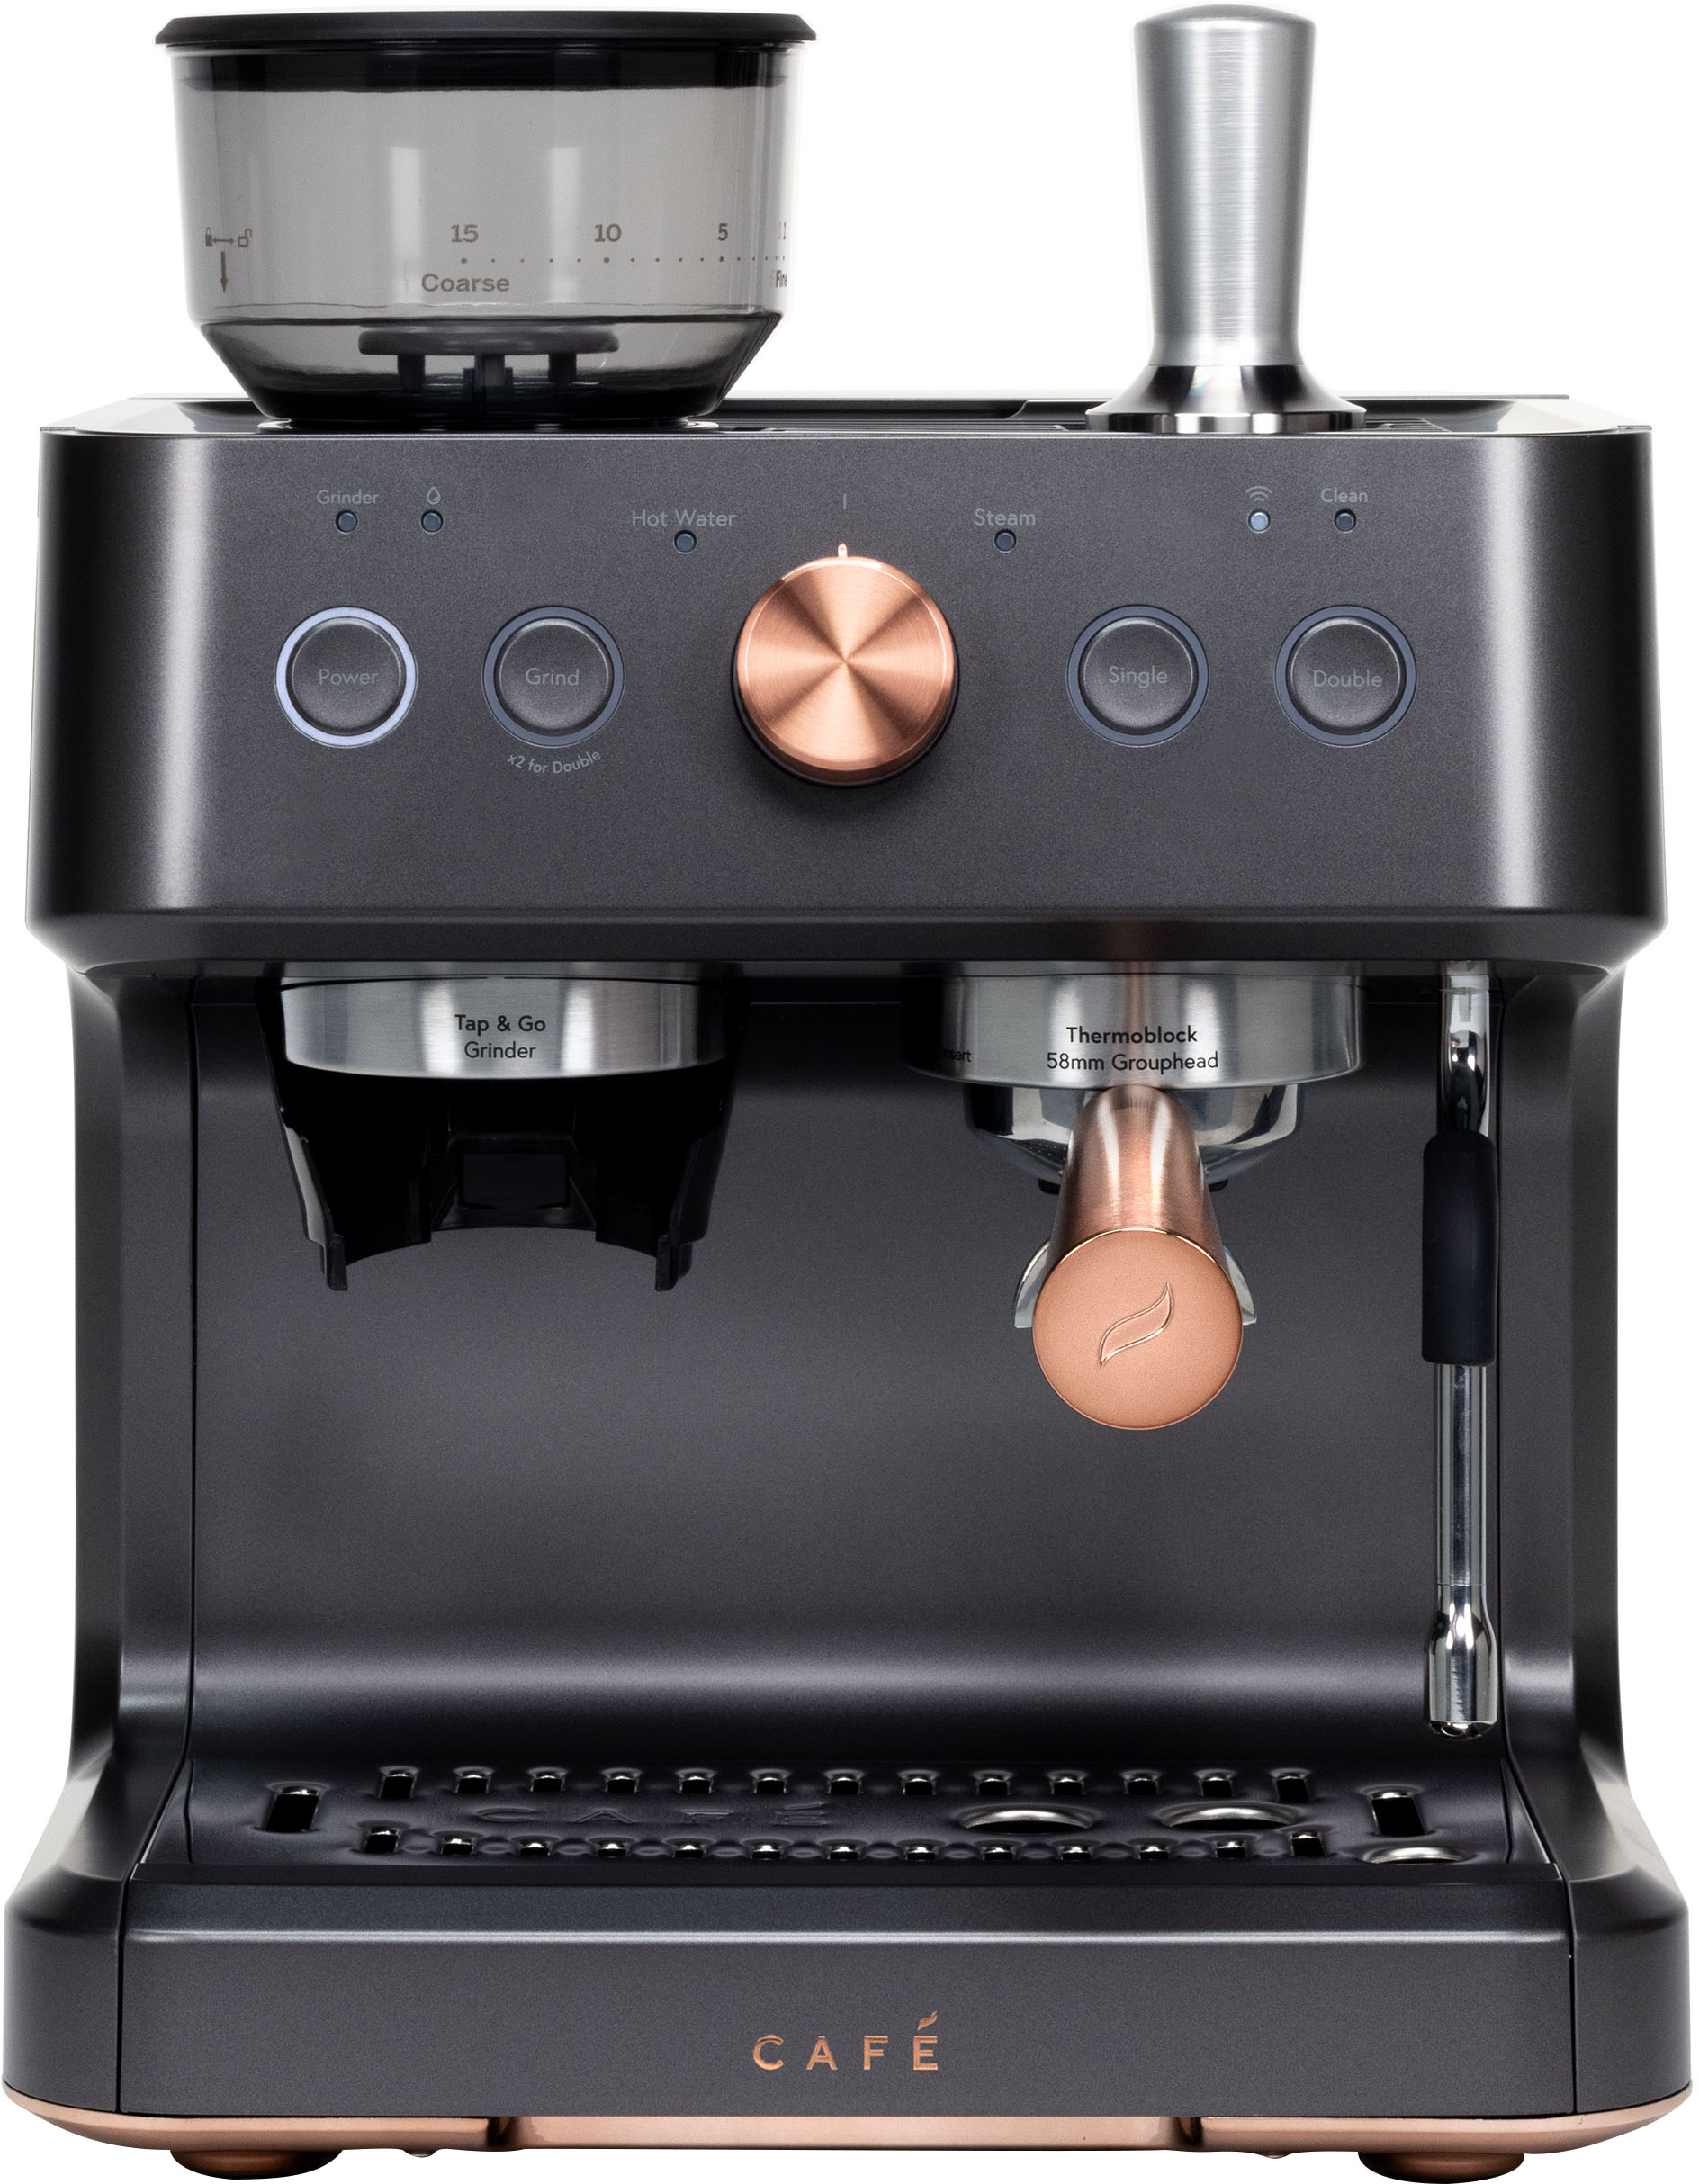 1pc Aeomjk Semi-automatic Italian Espresso Machine 20bar